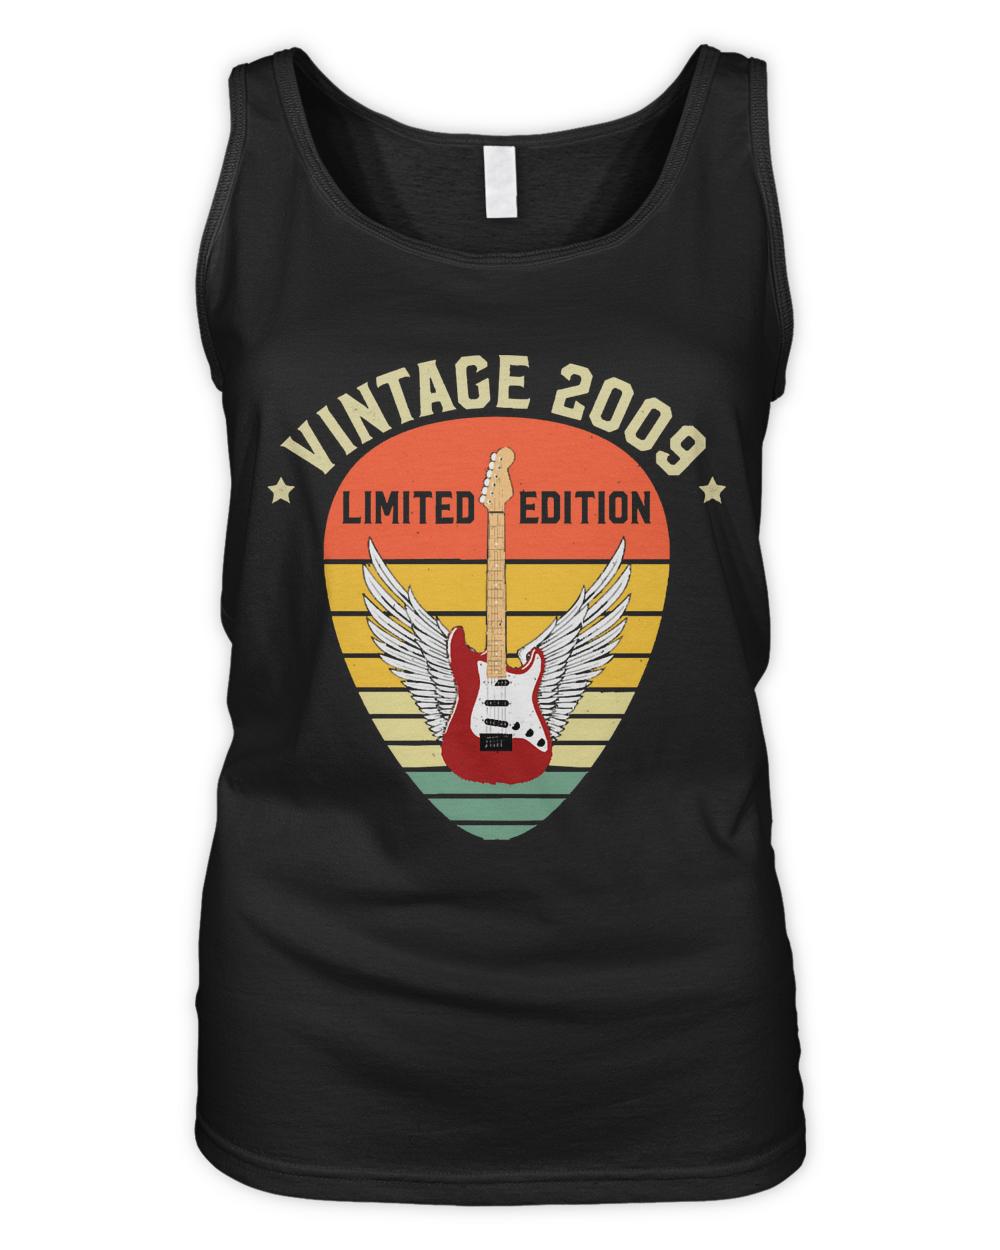 Vintage 2009 T- Shirt Vintage 2009 Limited Edition Guitar T- Shirt